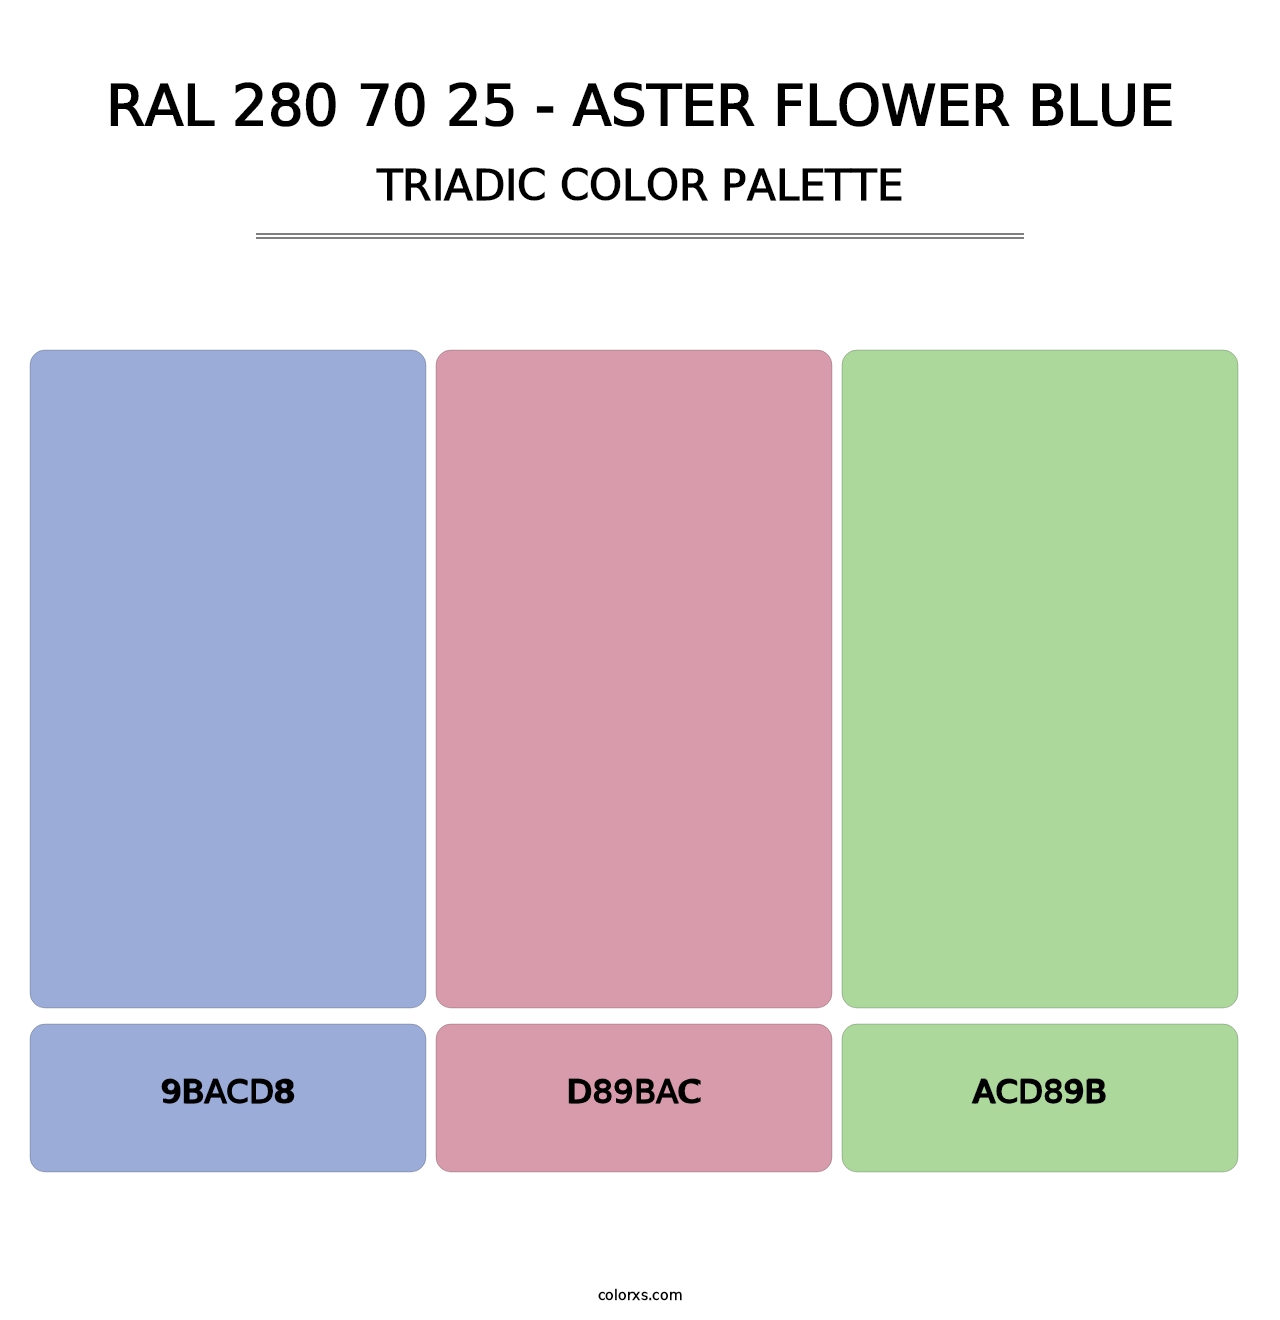 RAL 280 70 25 - Aster Flower Blue - Triadic Color Palette